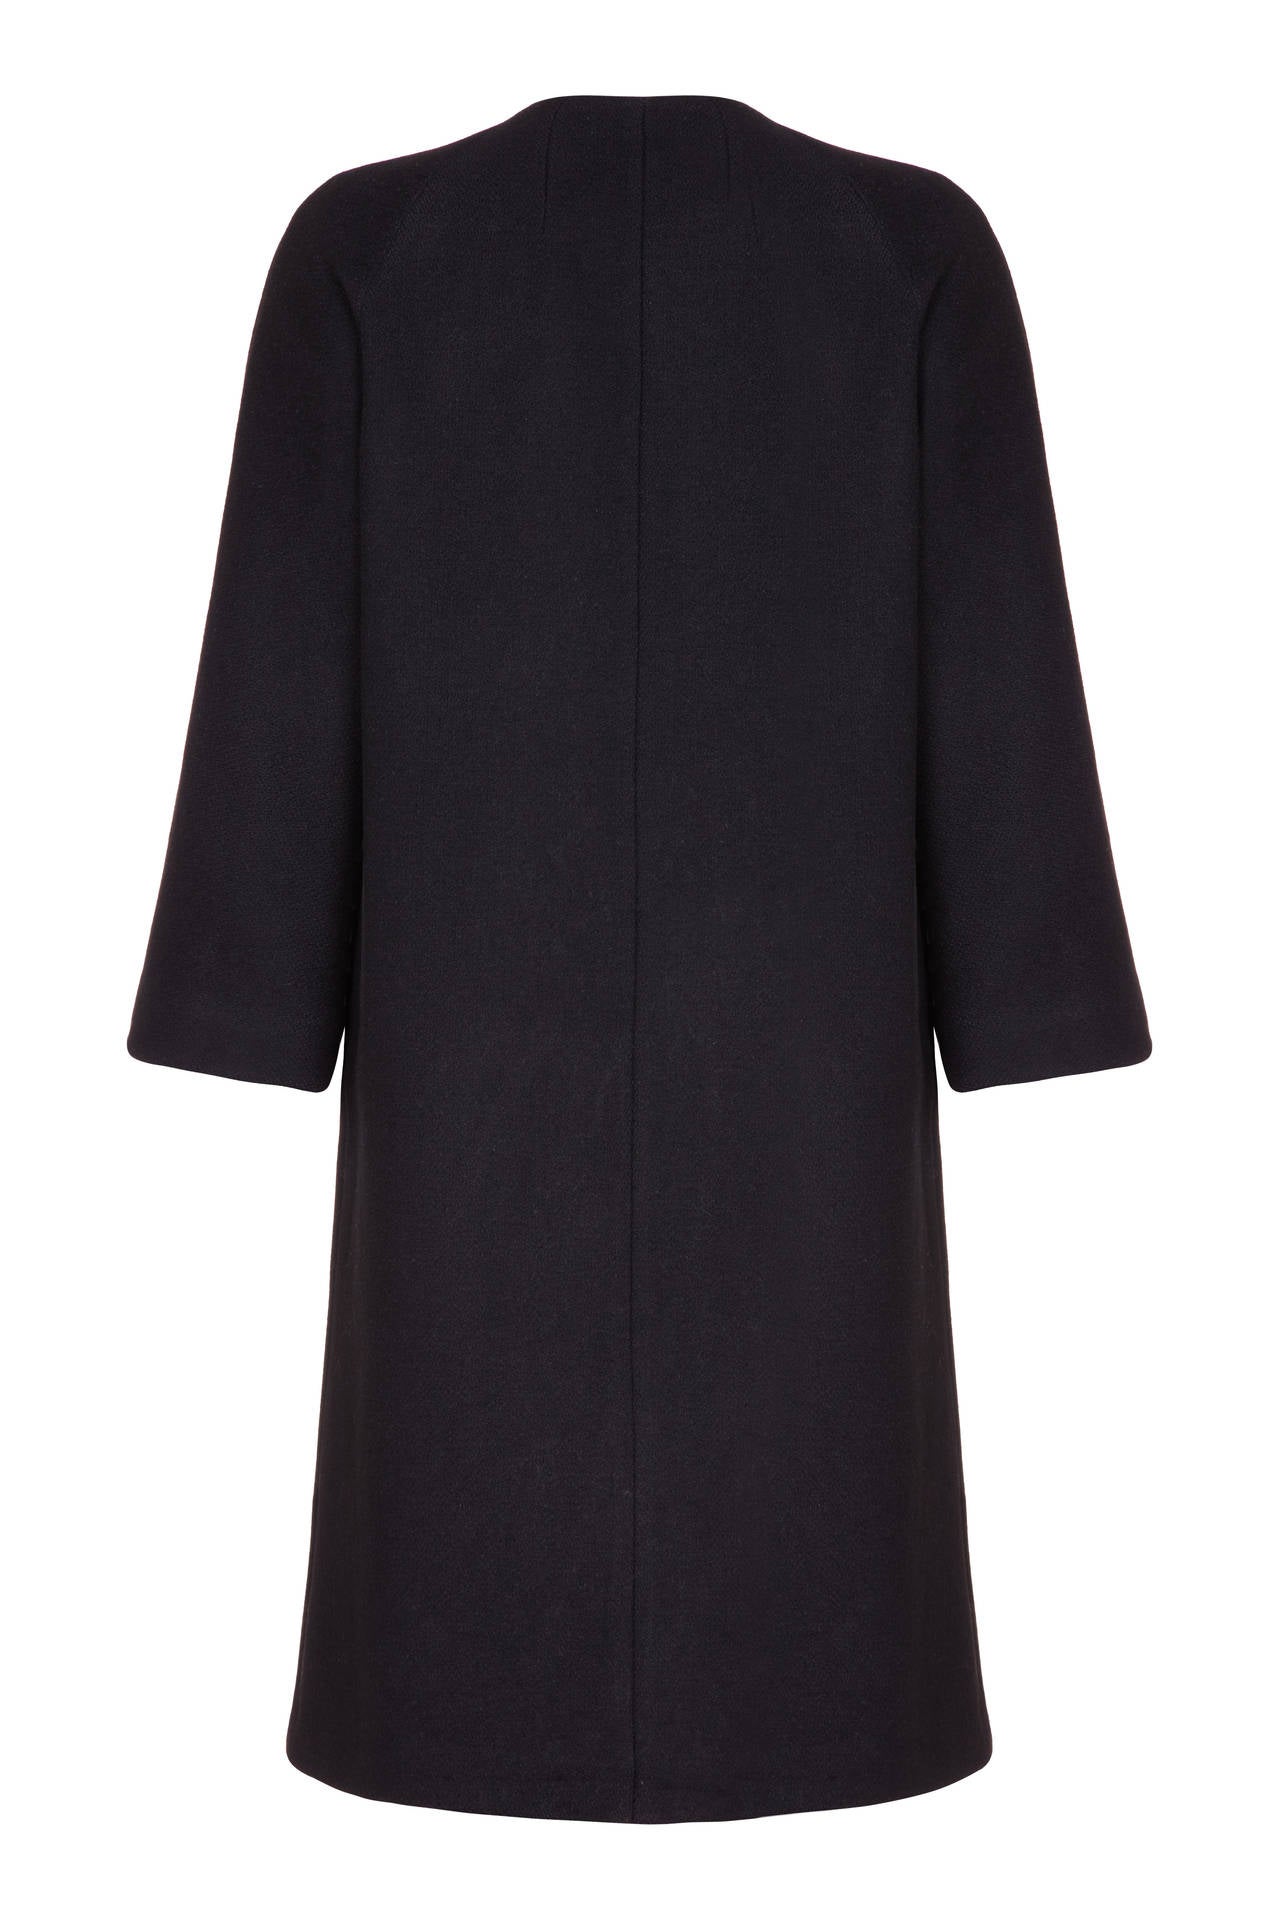 1960s Stylish Black Wool Mod Coat For Sale at 1stdibs